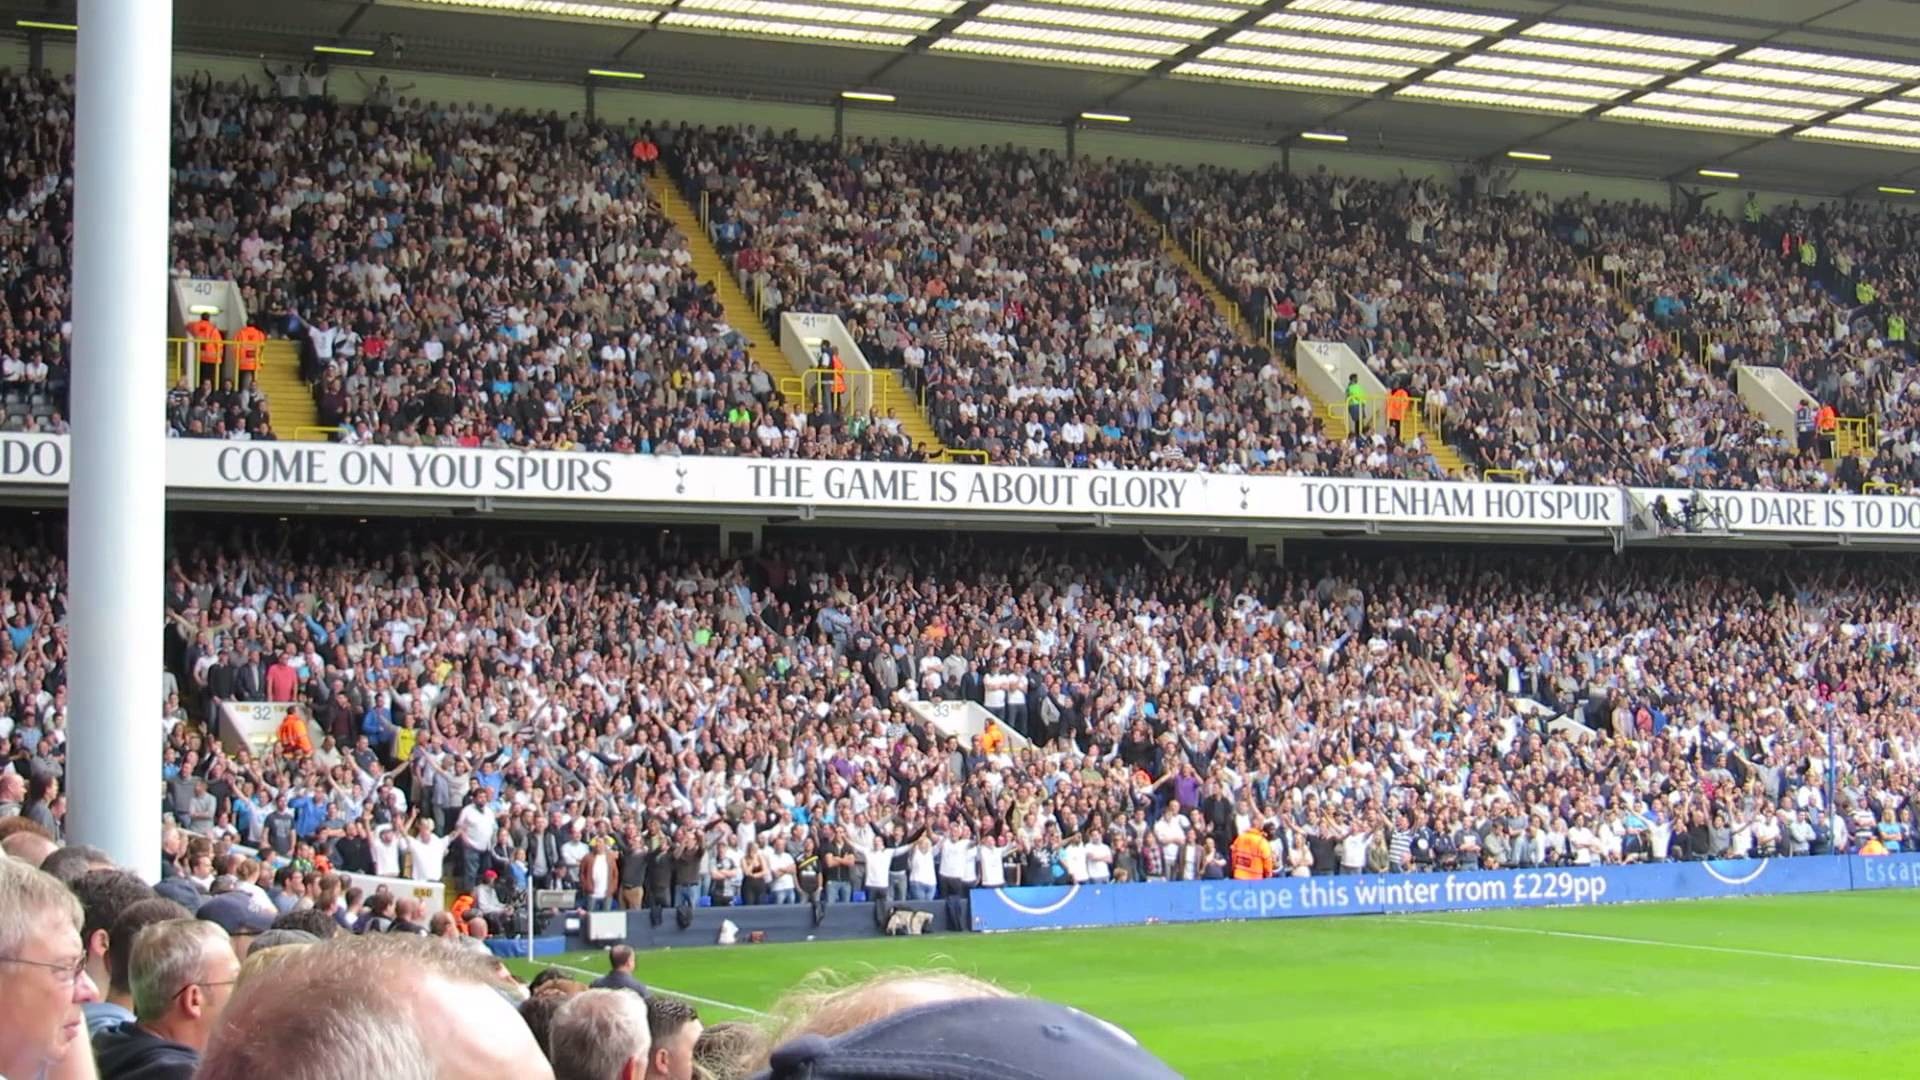 1920x1080 Tottenham Hotspur FC vs Chelsea FC - Chants @ White Hart Lane 28.09.2013  1080p HD - YouTube